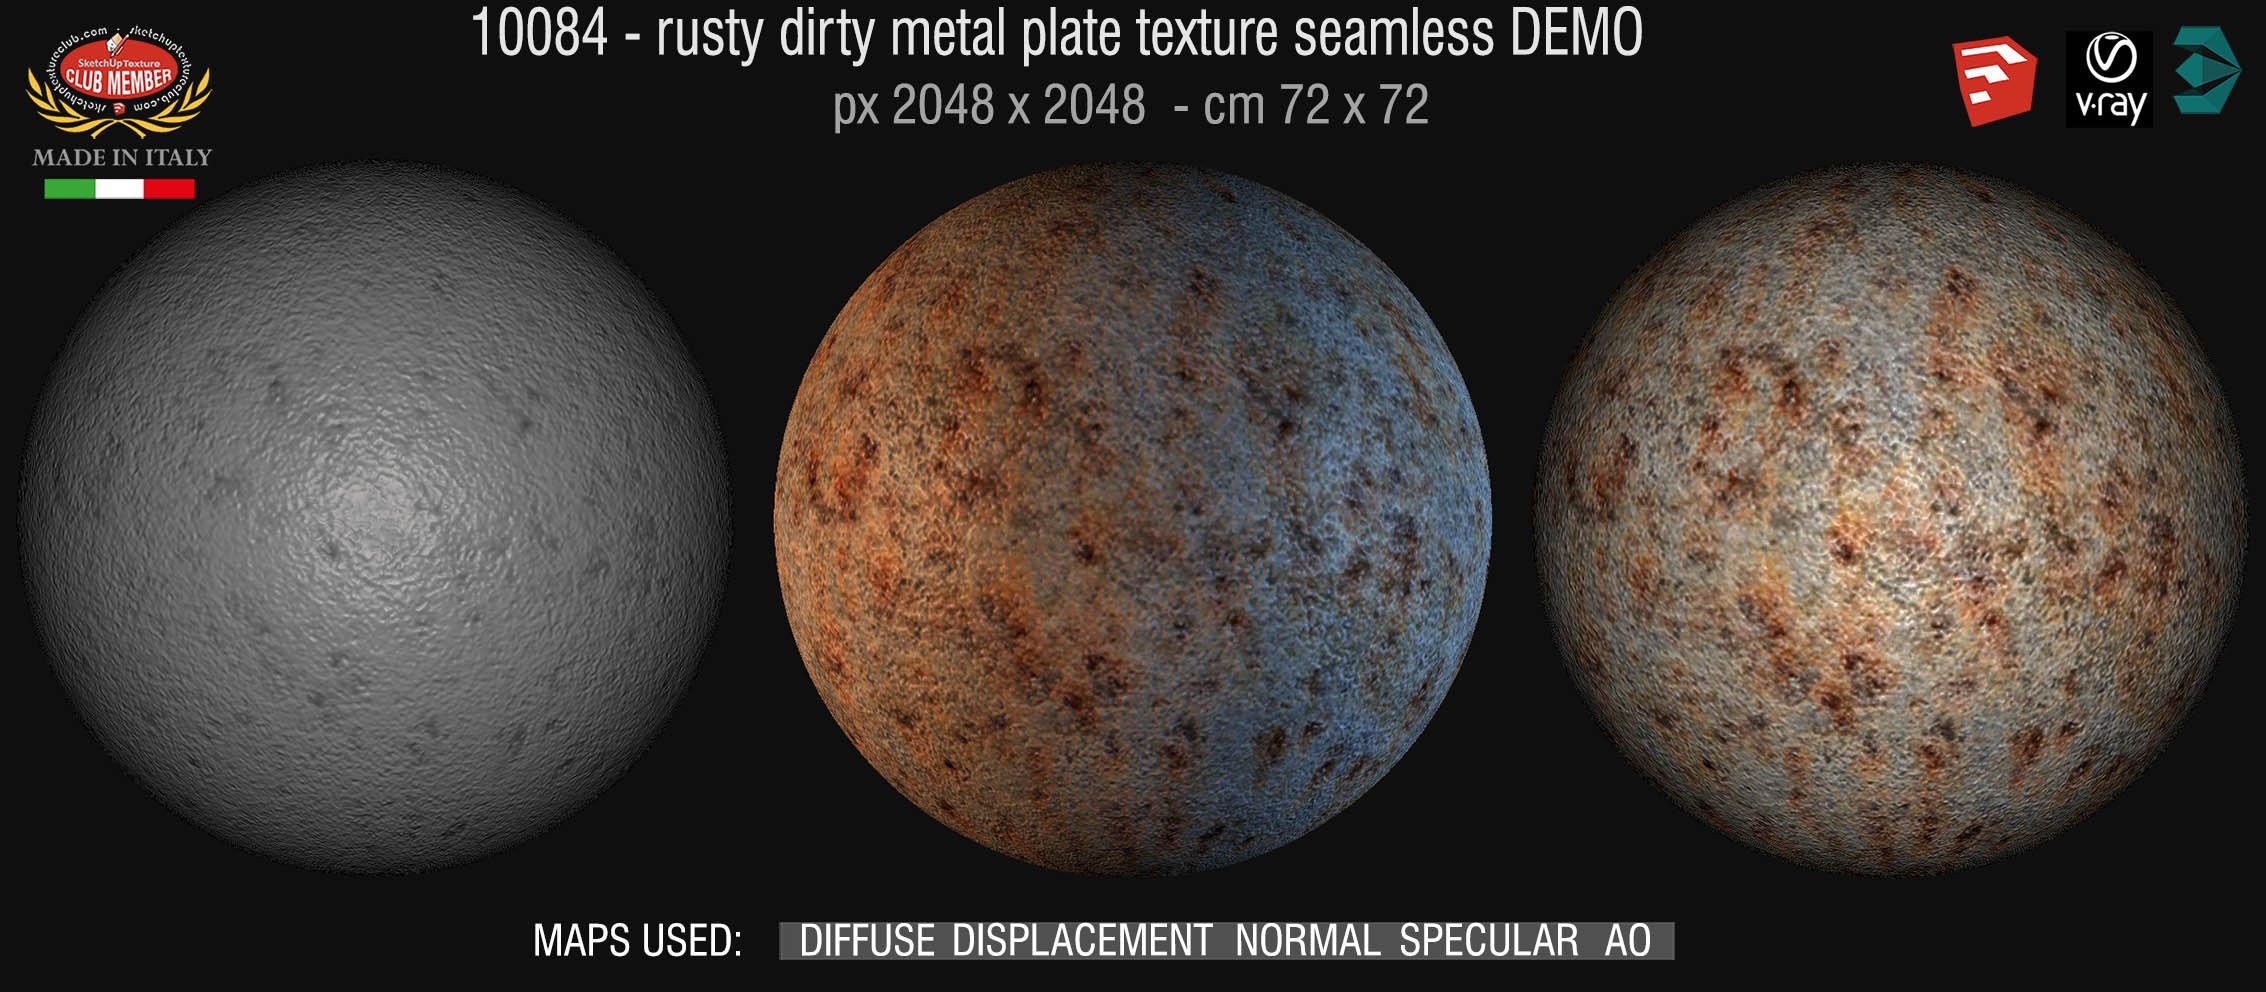 10084 HR Rusty dirty metal texture seamless + maps DEMO